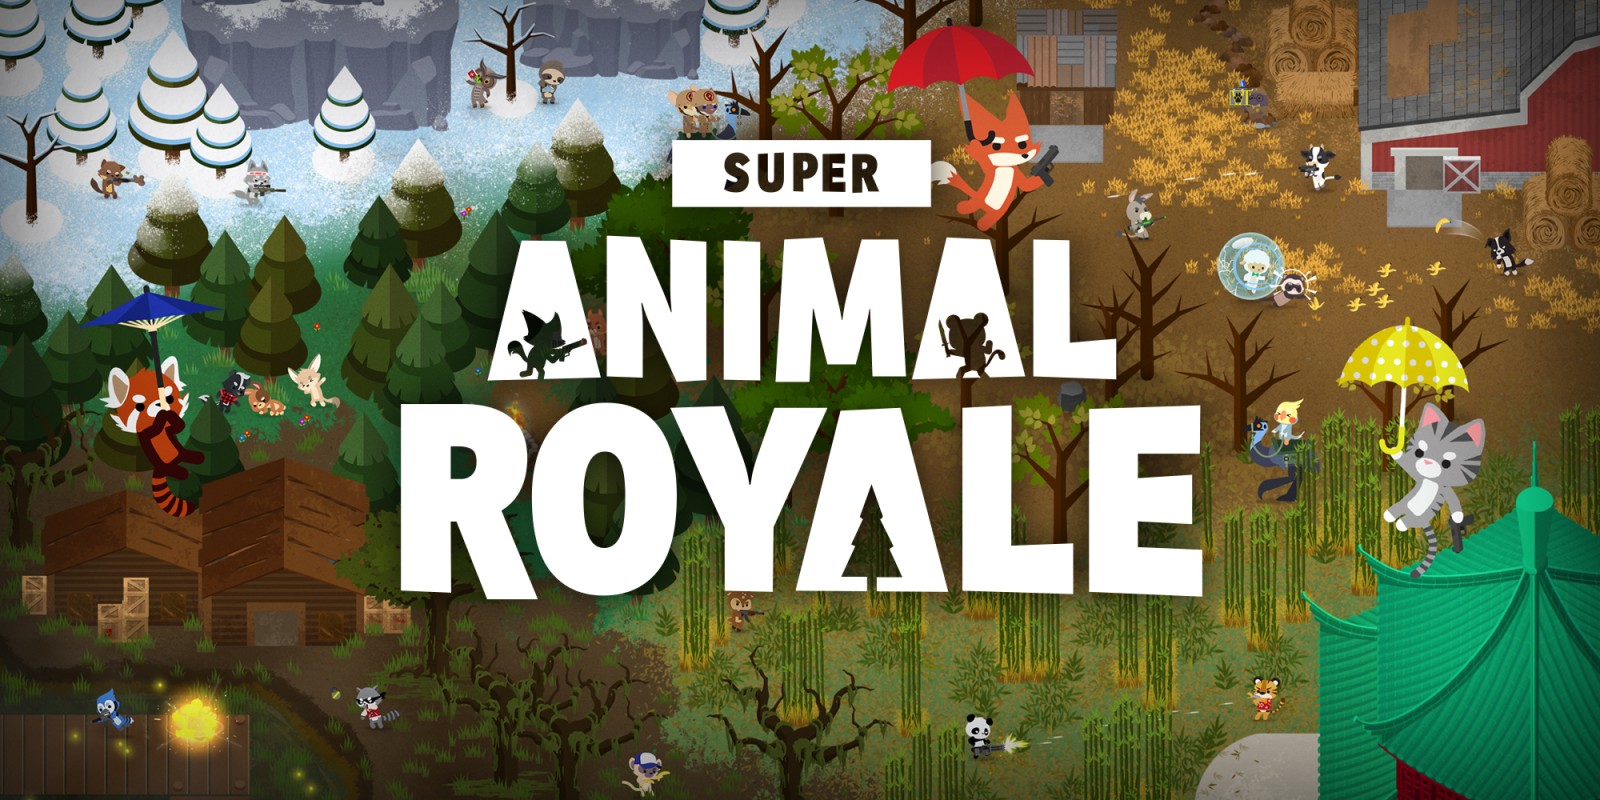 Super Animal Royal